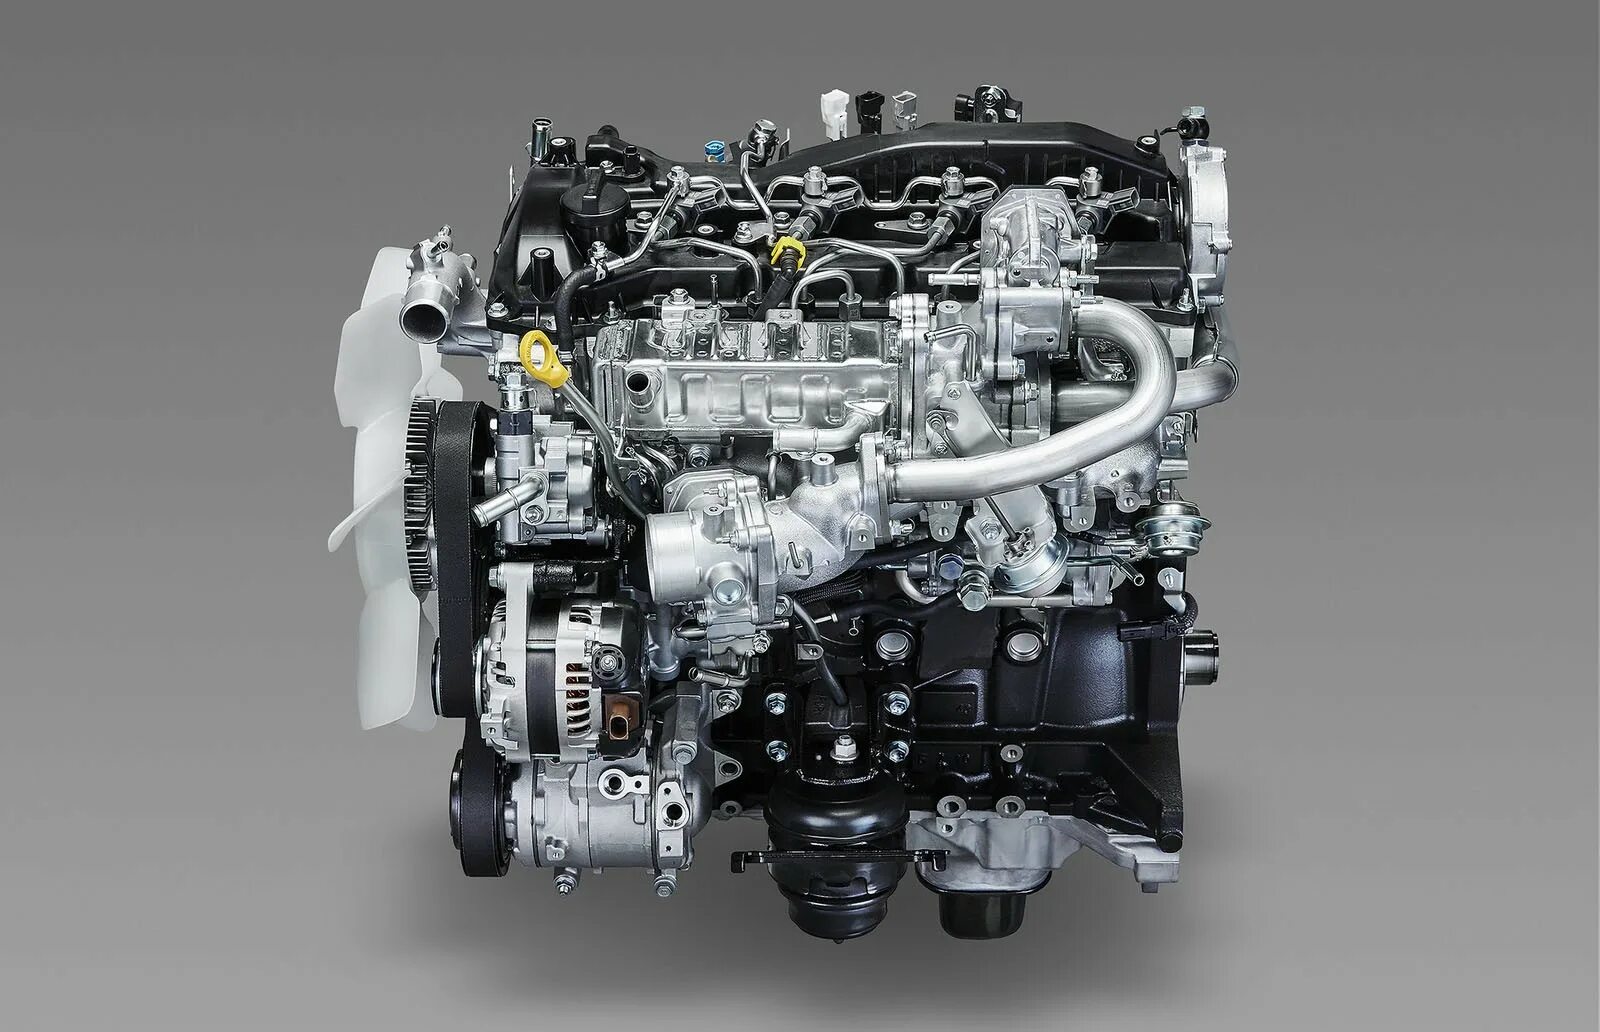 Toyota Hilux 2.8 дизель 1gd-FTV. Двигатель Toyota 1gd-FTV. Тойота Прадо дизель 2.8 (1gd-FTV). Дизельный двигатель Тойота 2.8.